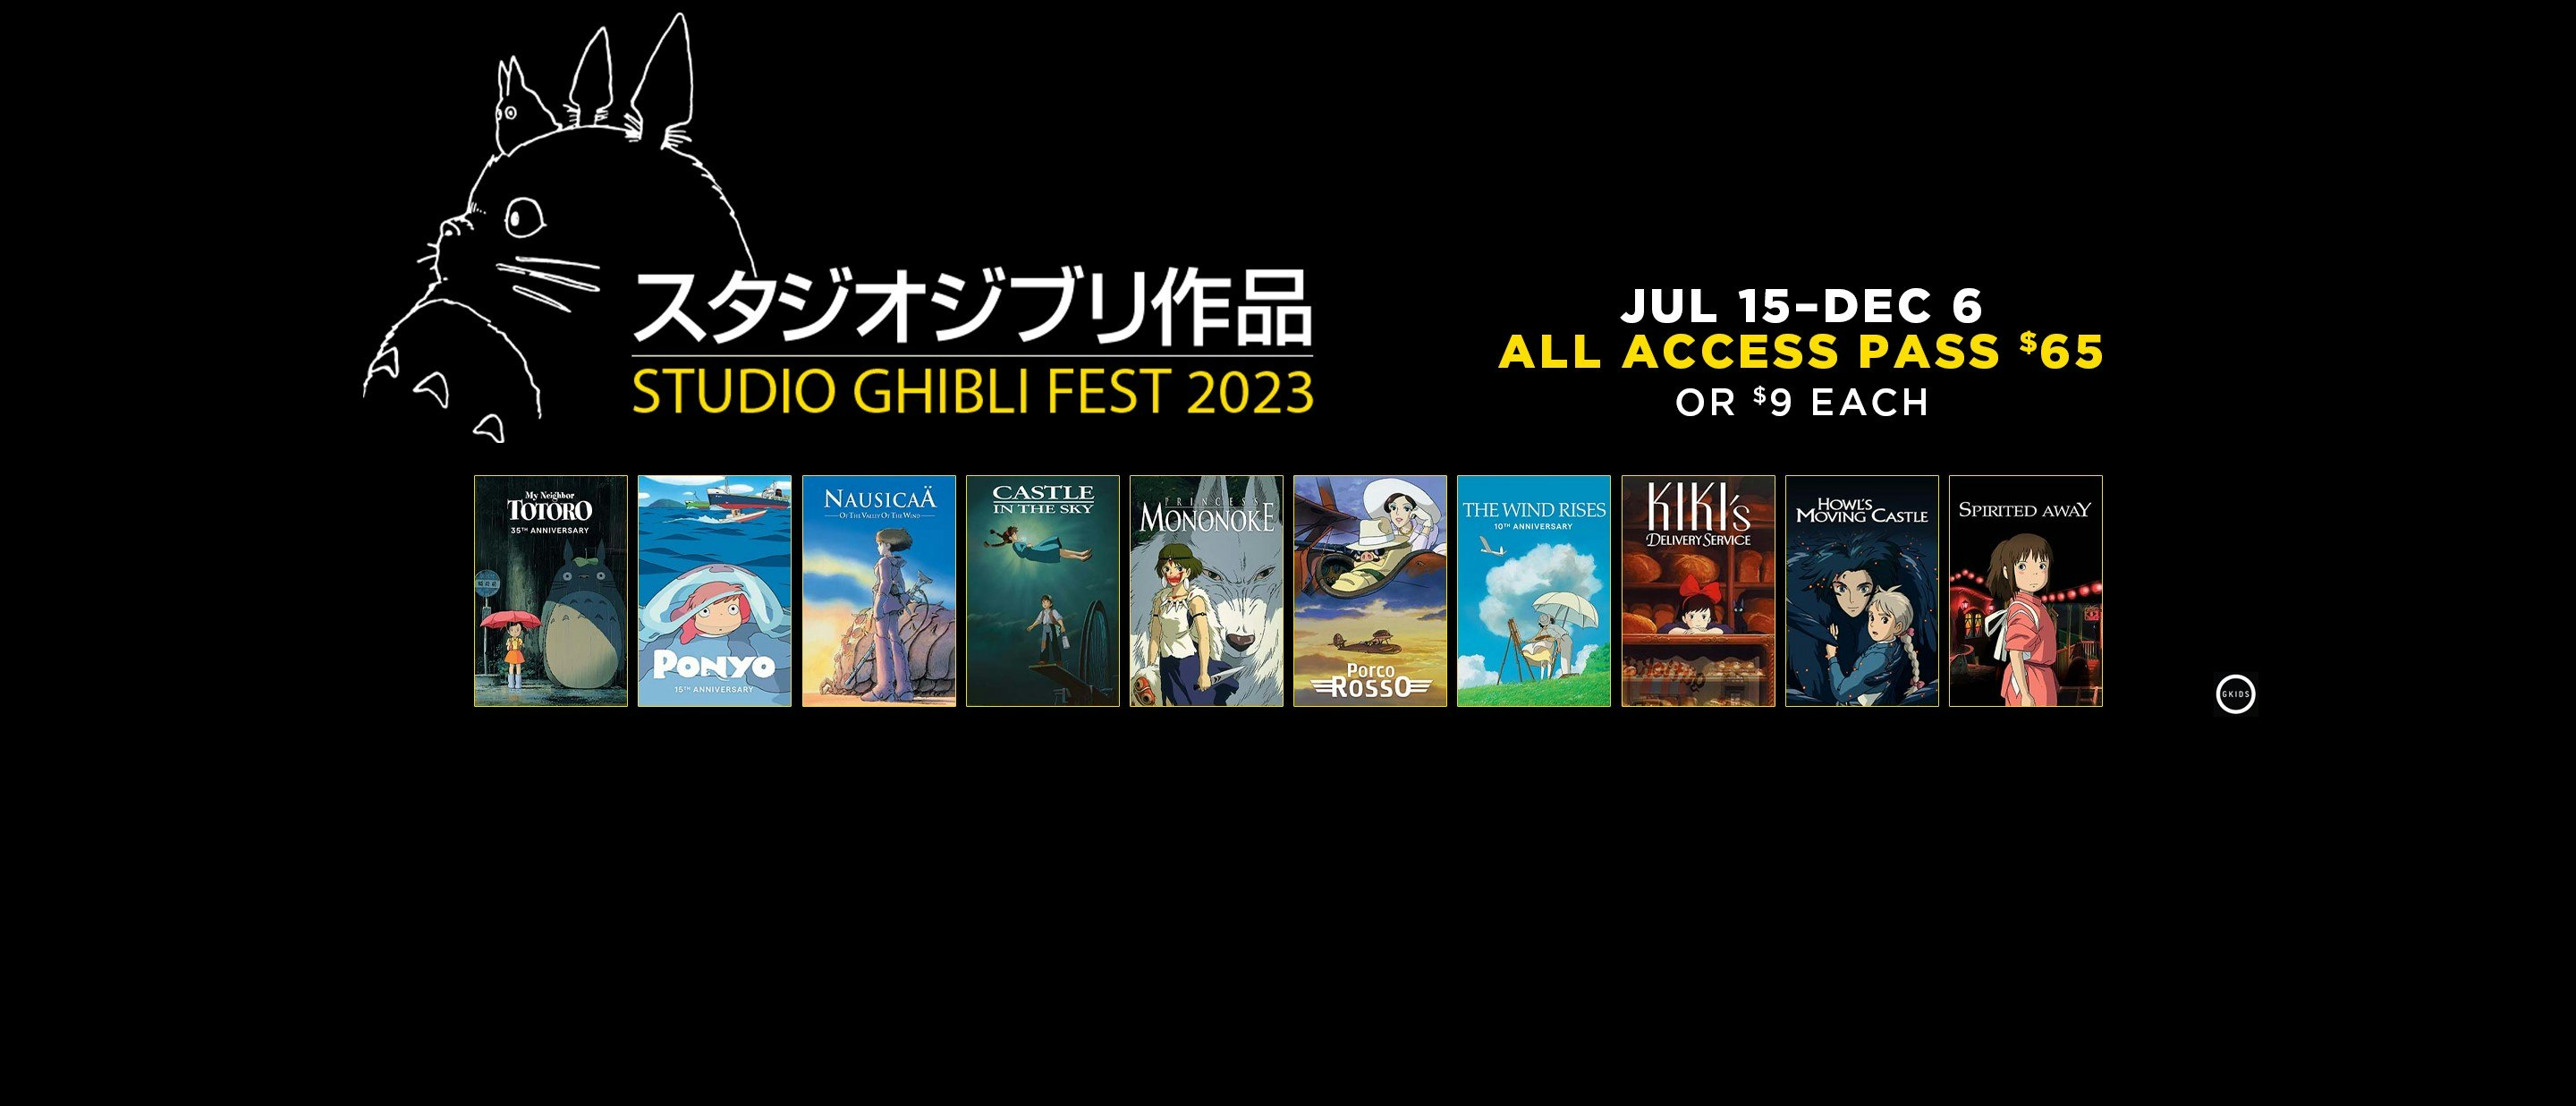 Studio Ghibli Fest 2023